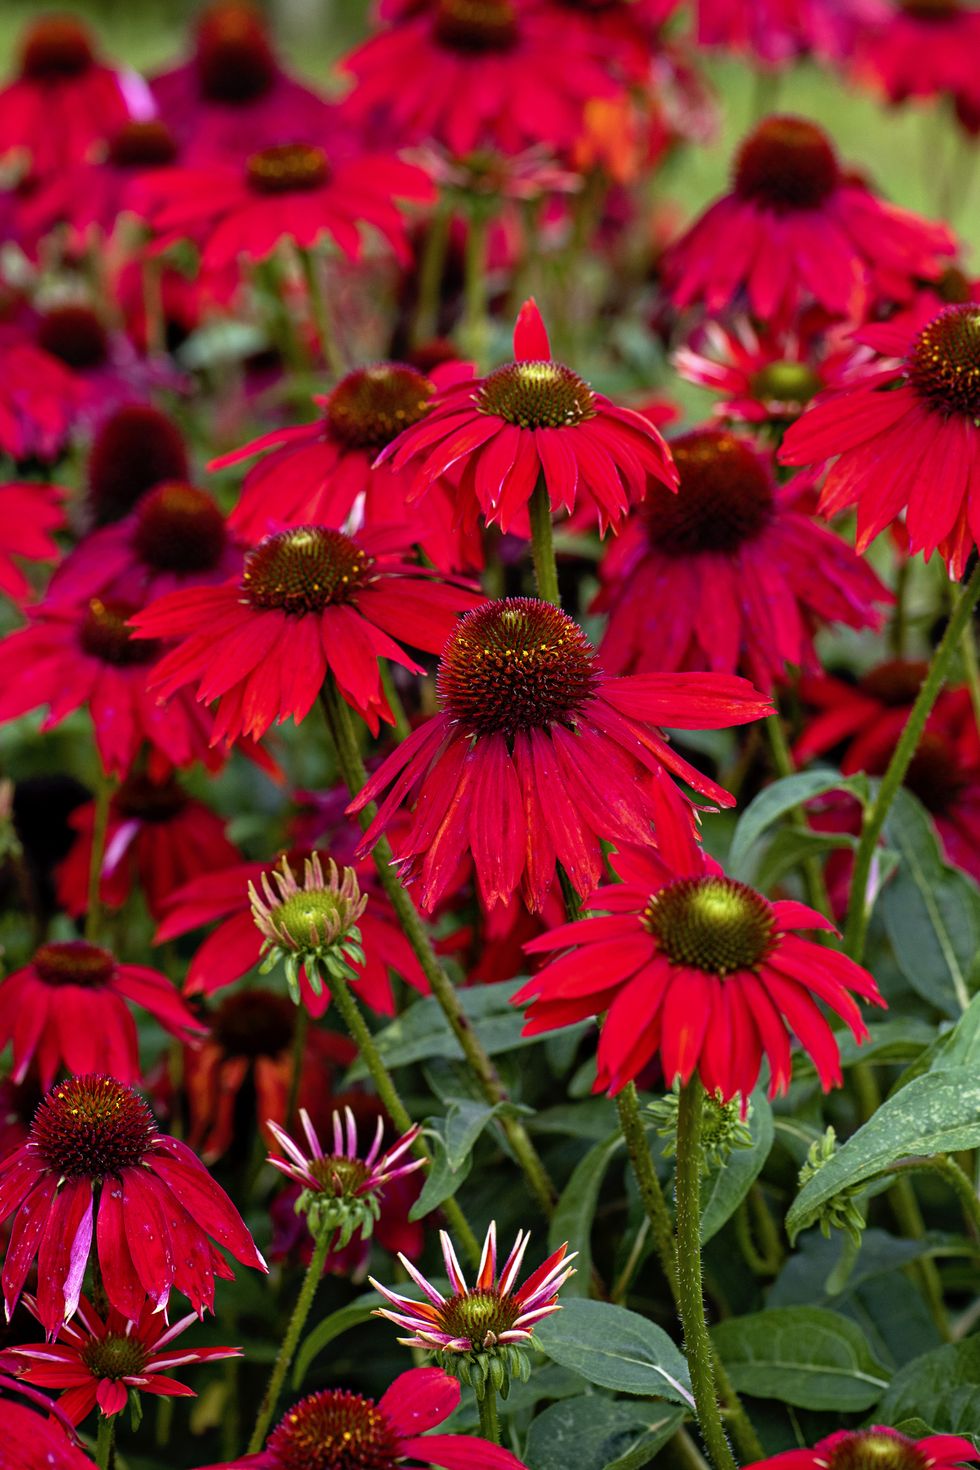 coneflower red flowers in a garden